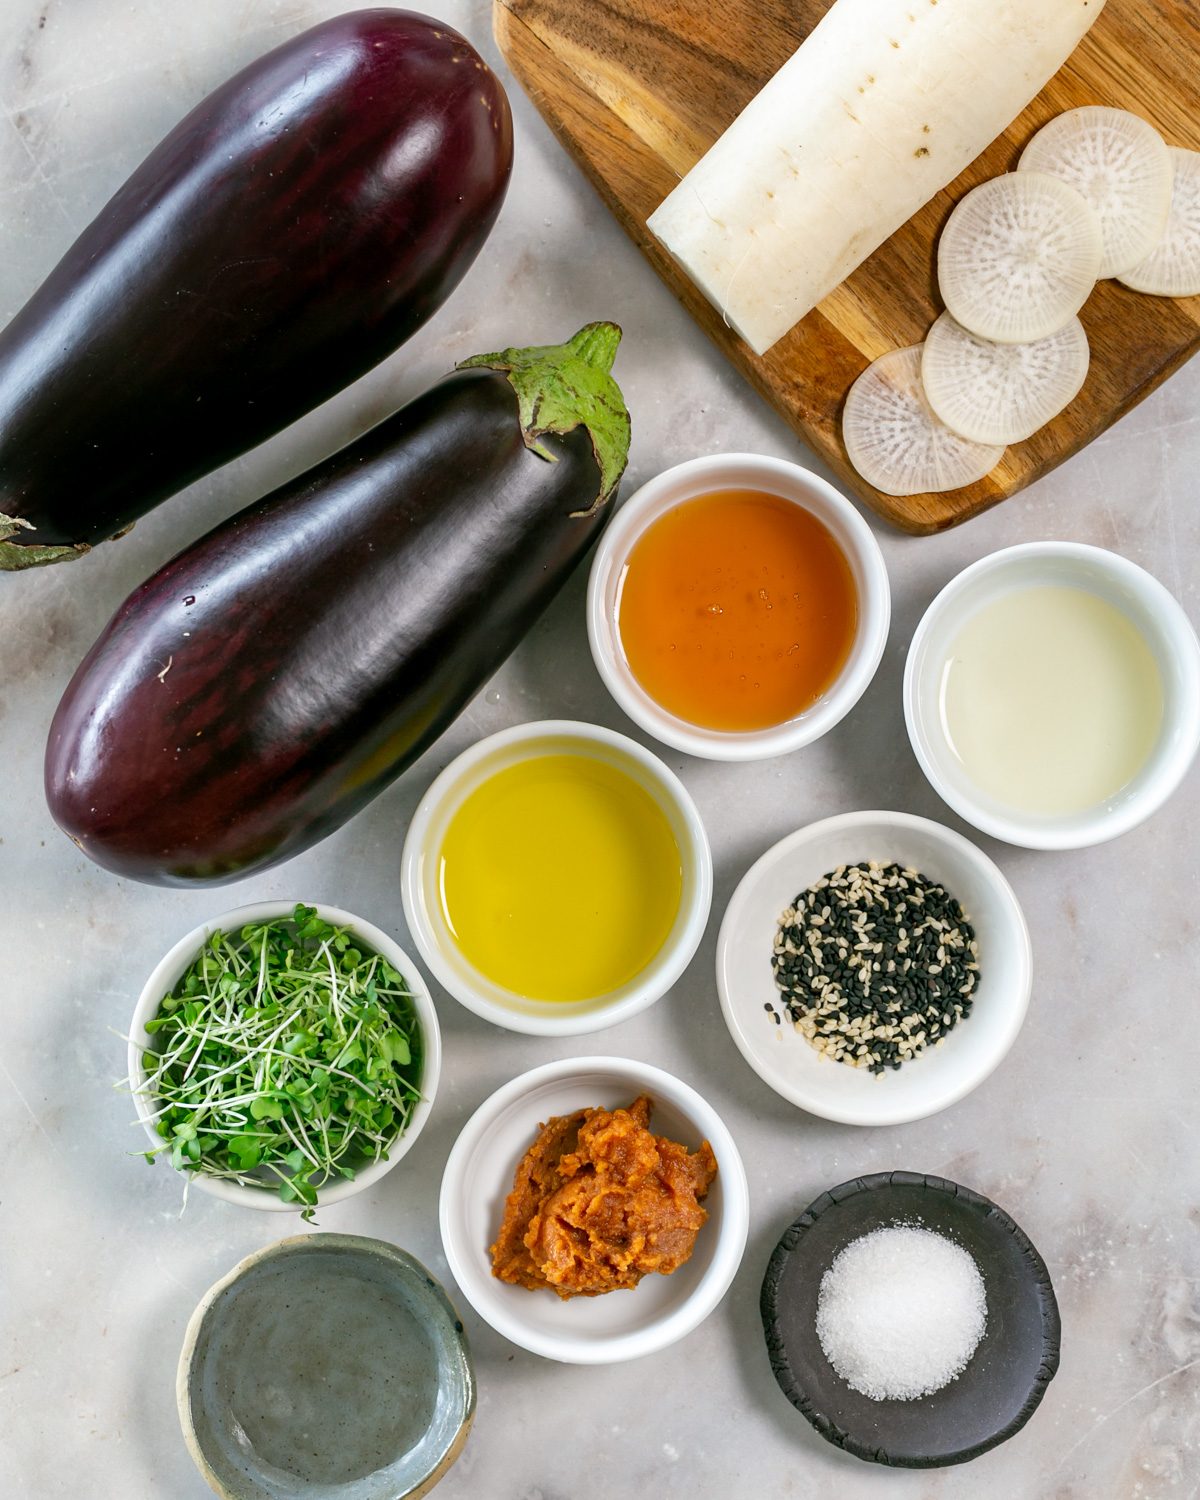 Ingredients to make miso glazed aubergine